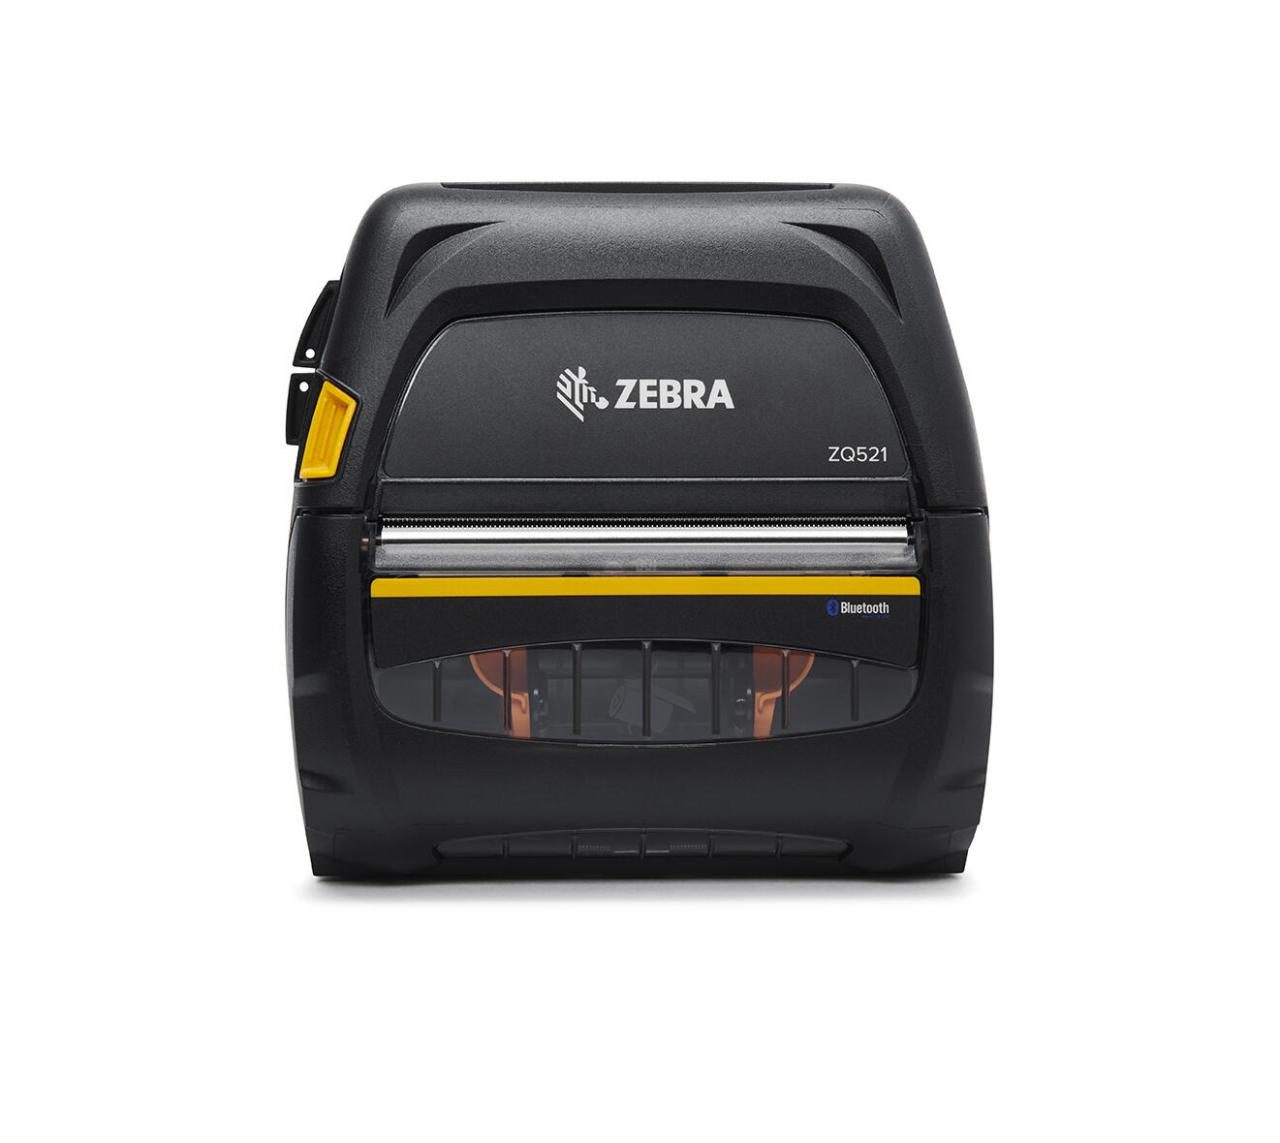 Zebra ZQ521 mobiler Drucker von Zebra Technologies